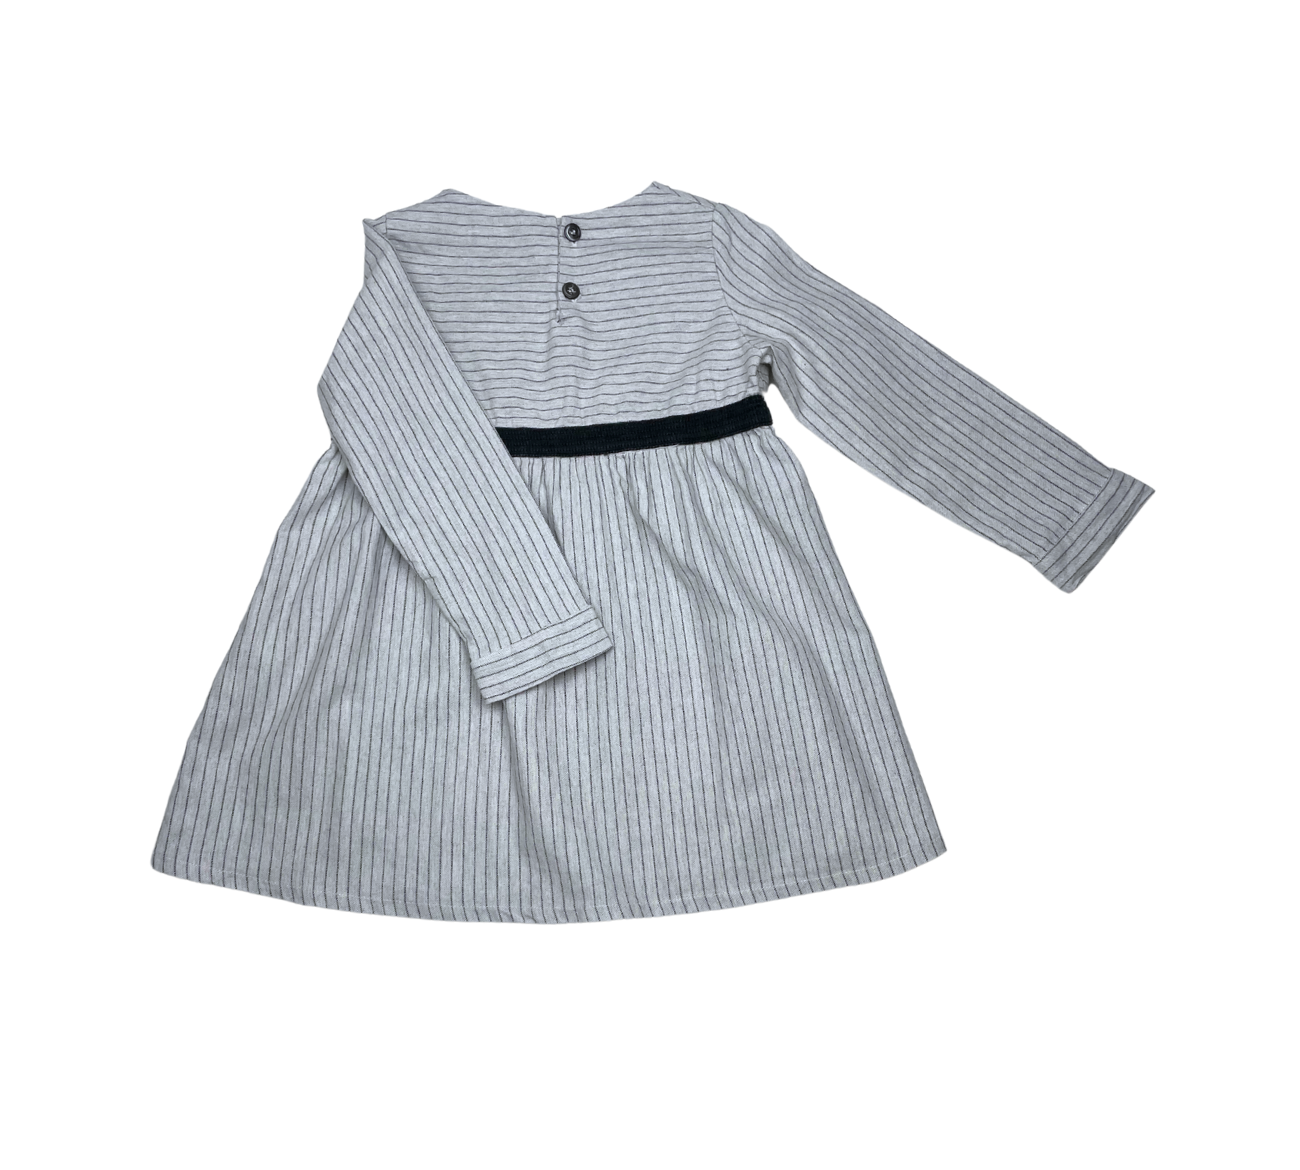 RISU RISU - Robe rayée grise - 3 ans